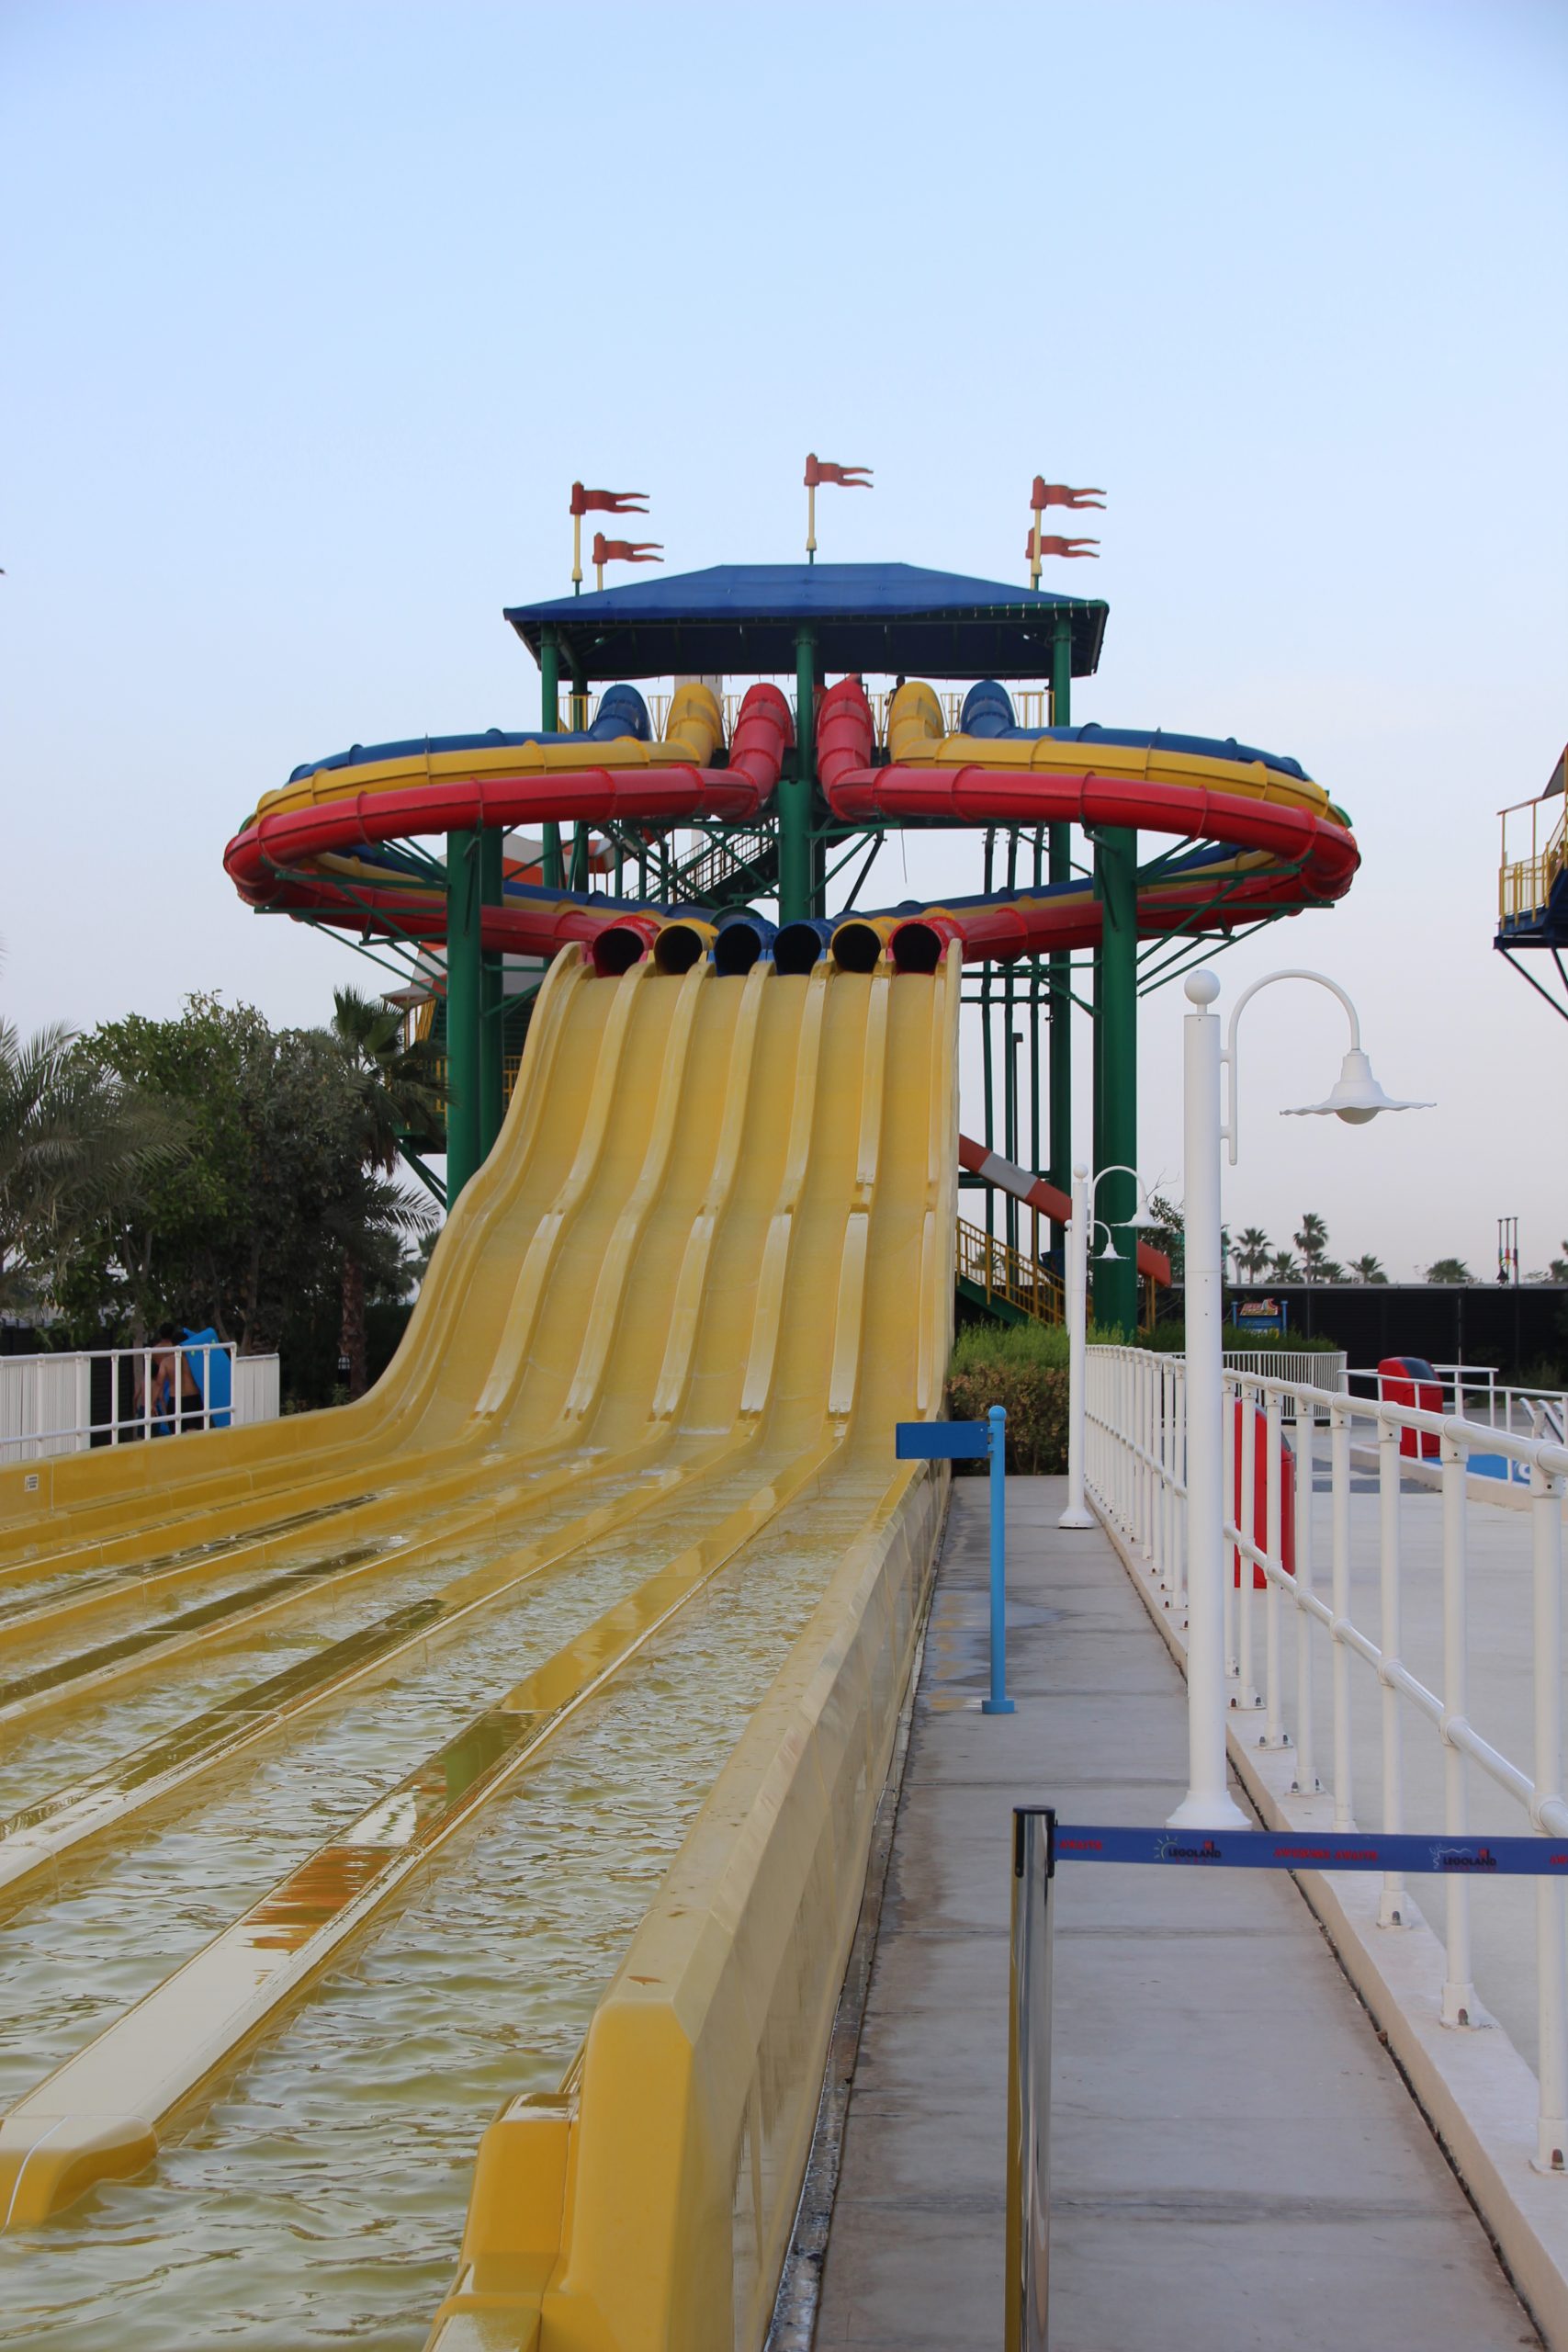 Legoland water park Dubai